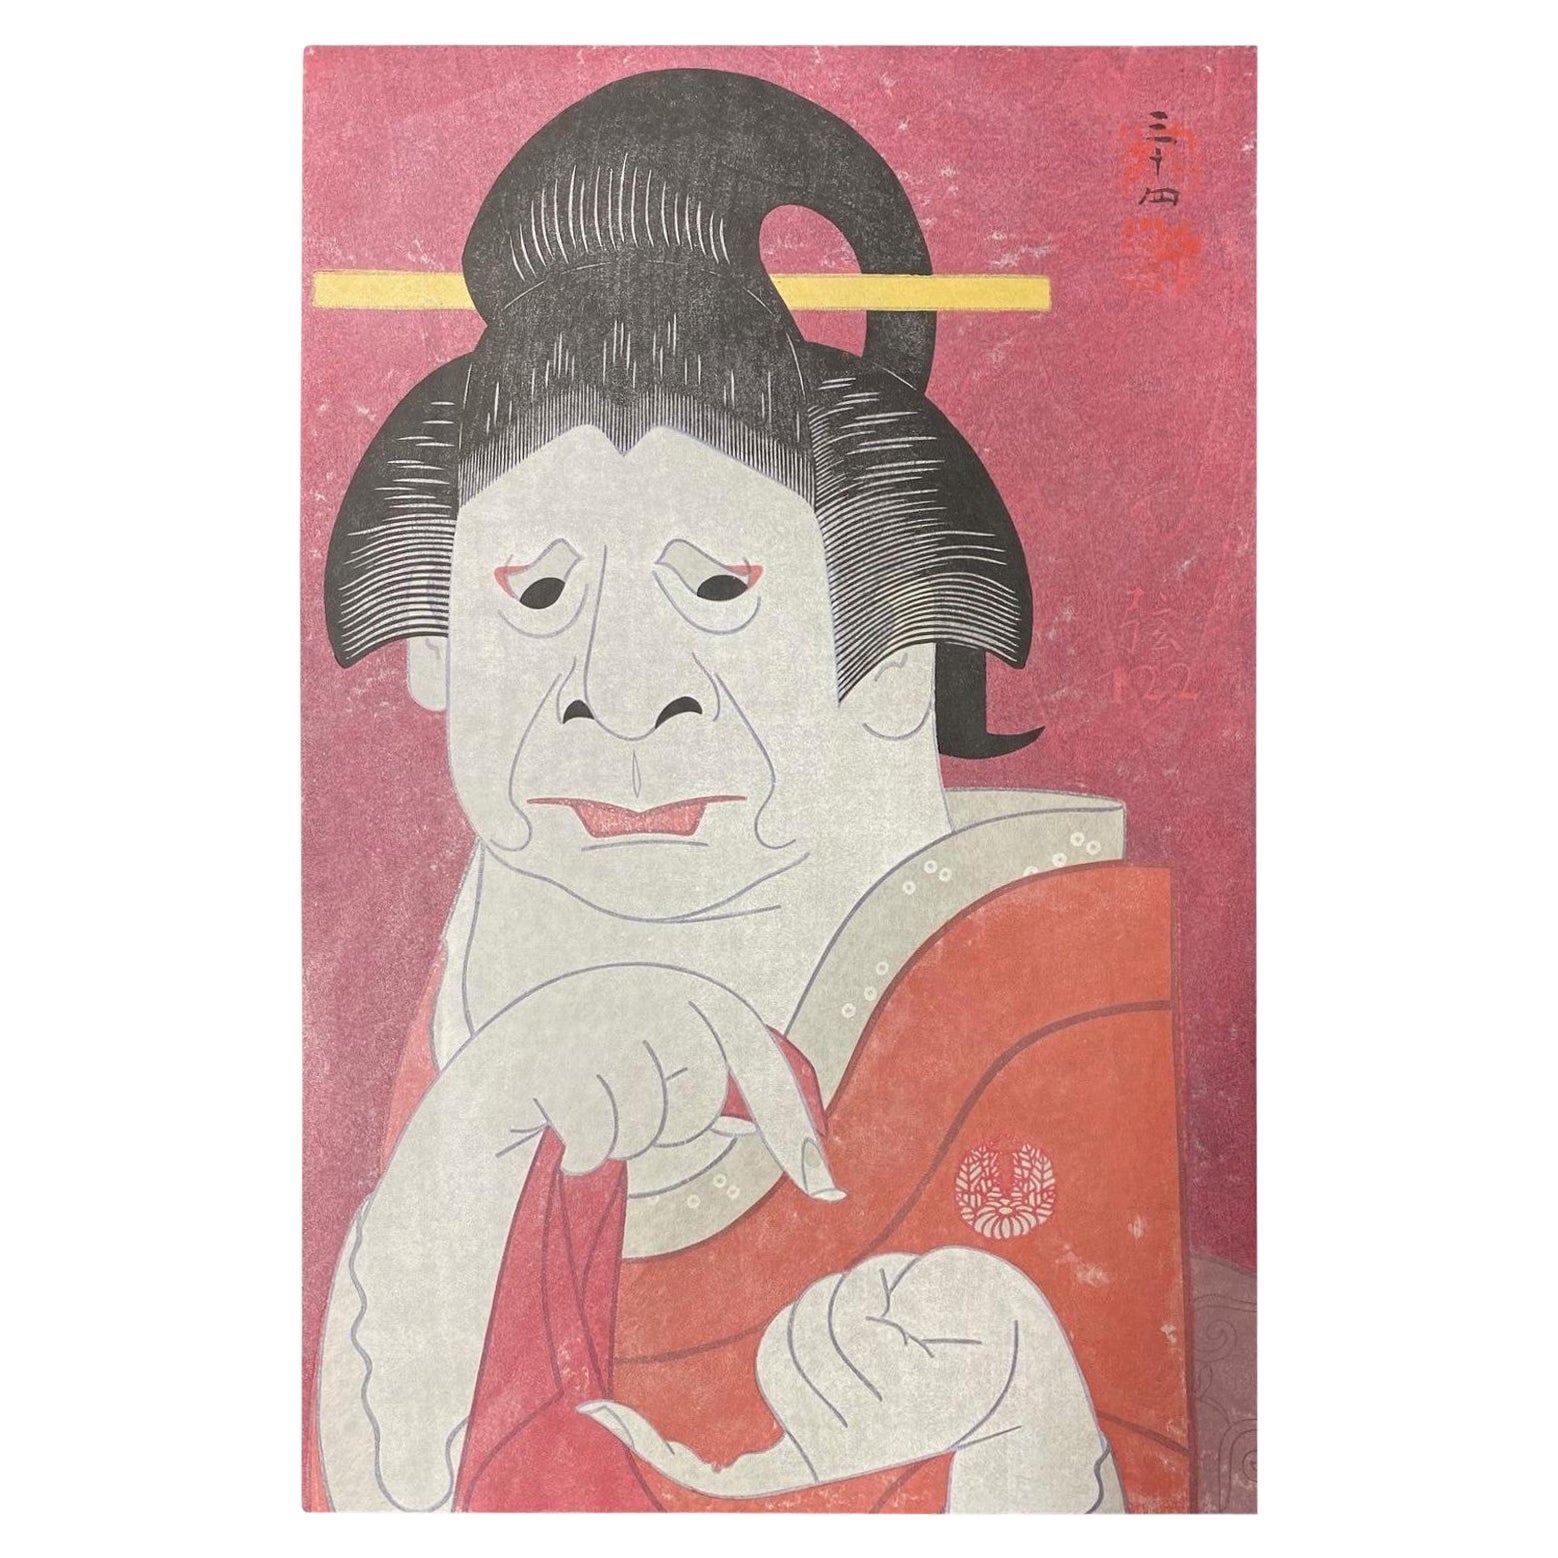 Tsuruya Kokei: Japanischer Holzschnitt in limitierter Auflage, signiert Onoe Baiko VII im Angebot